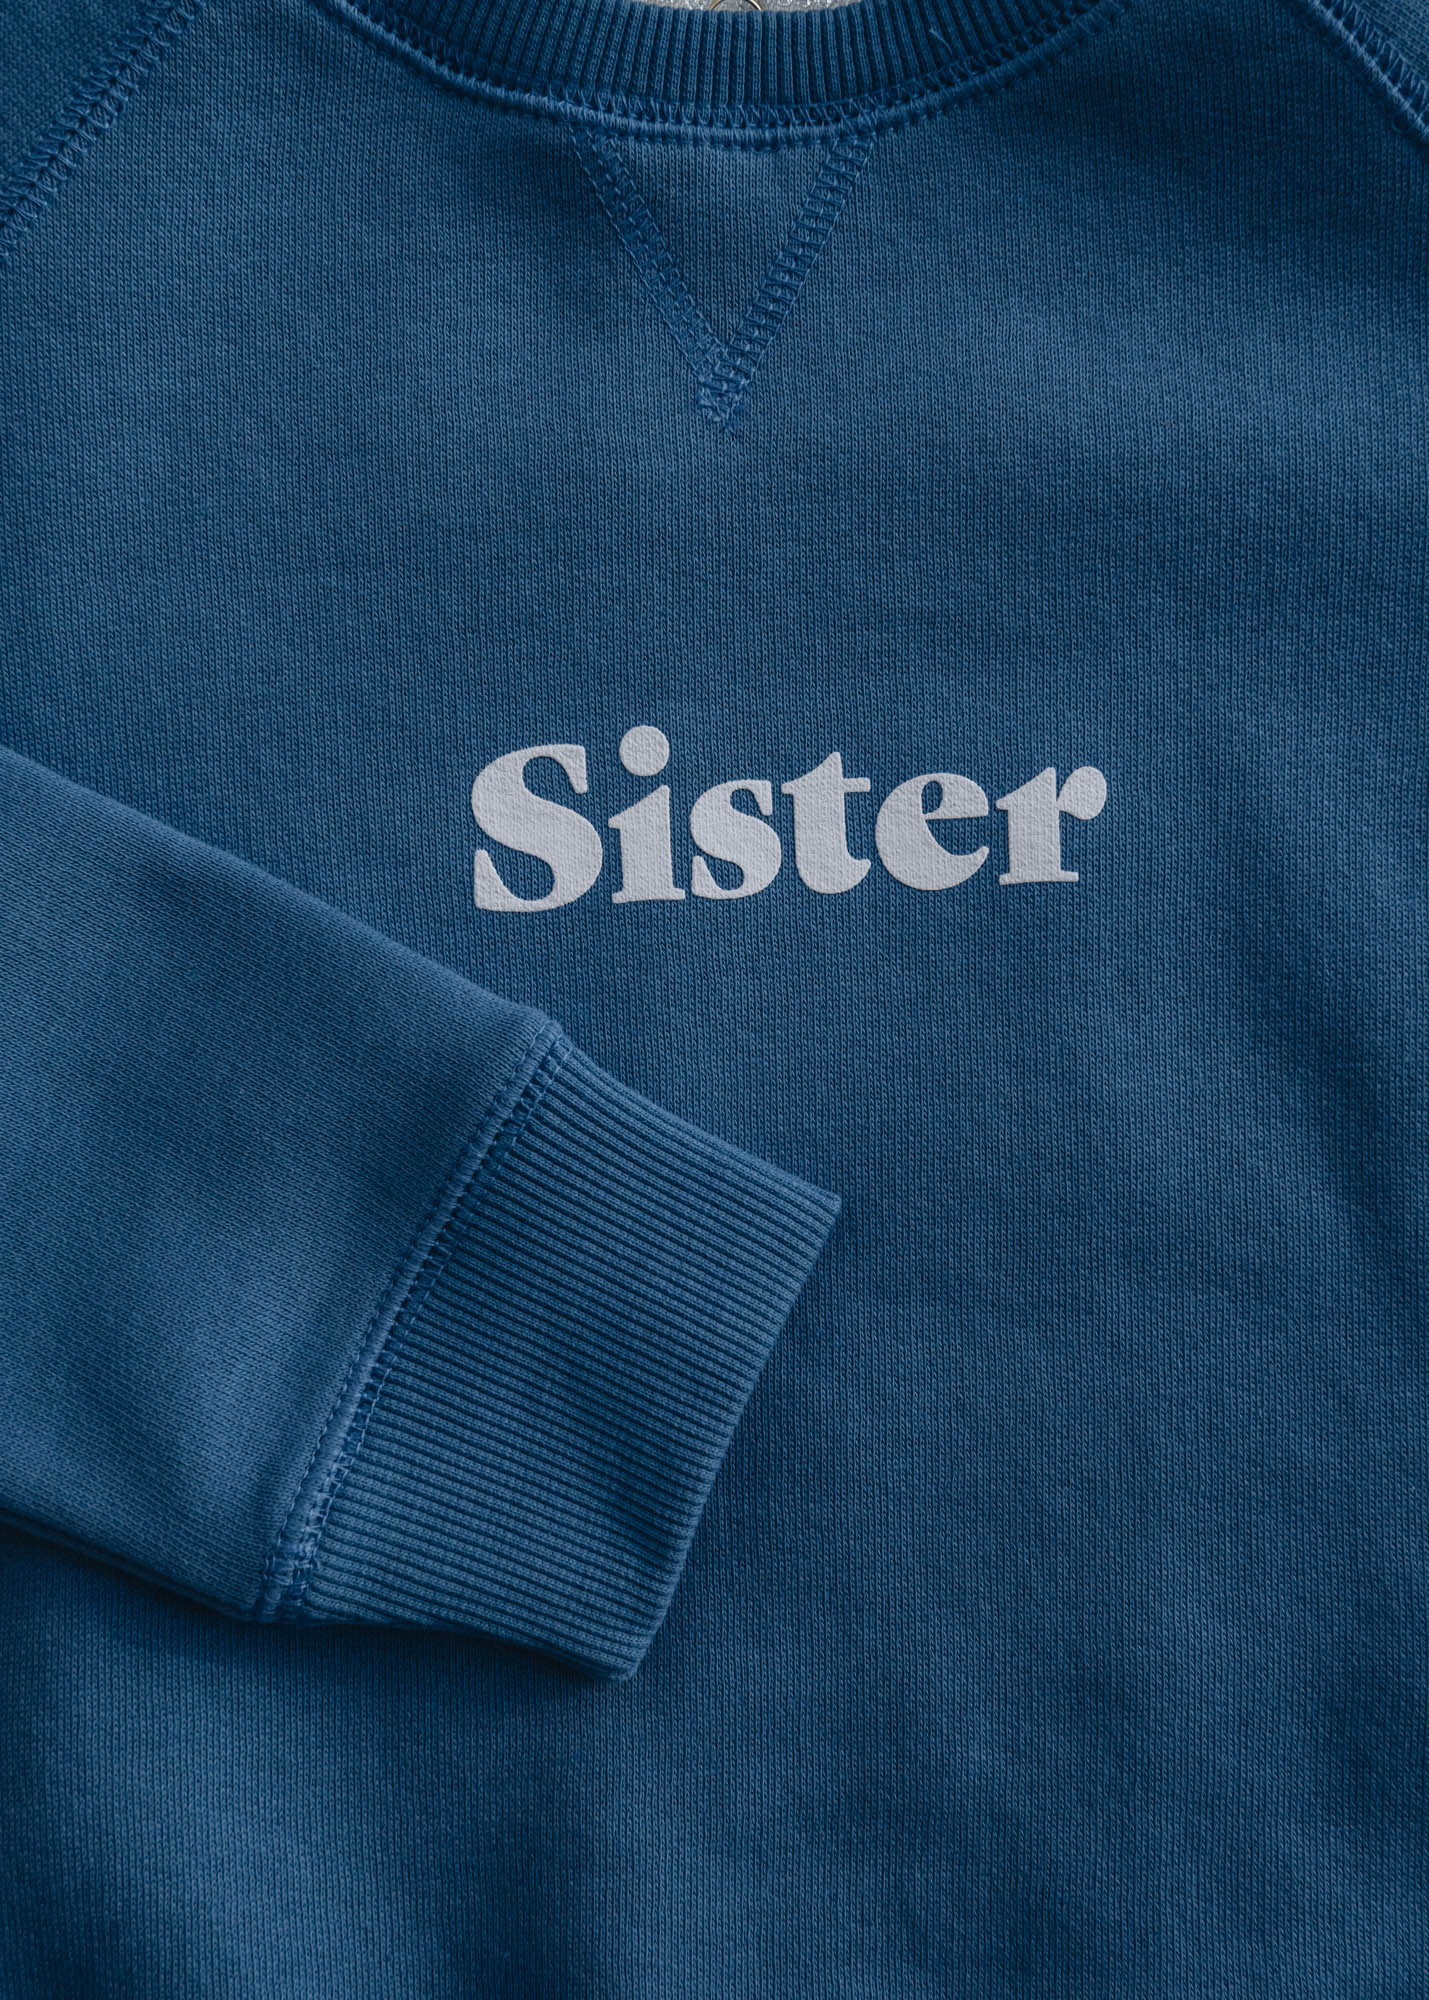 Bob & Blossom Children's Sister Sweater in Sailor Blue